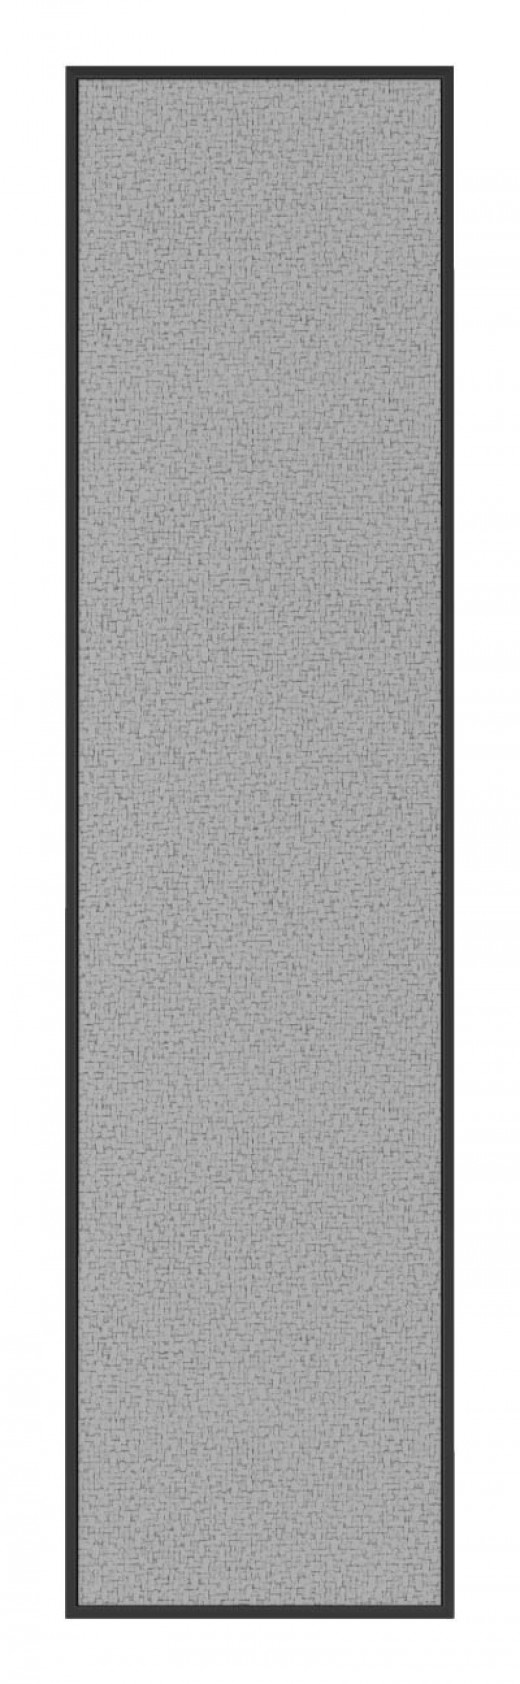 Border Bulletin Board w/ Black Frame, Vertical- 12W x 36H